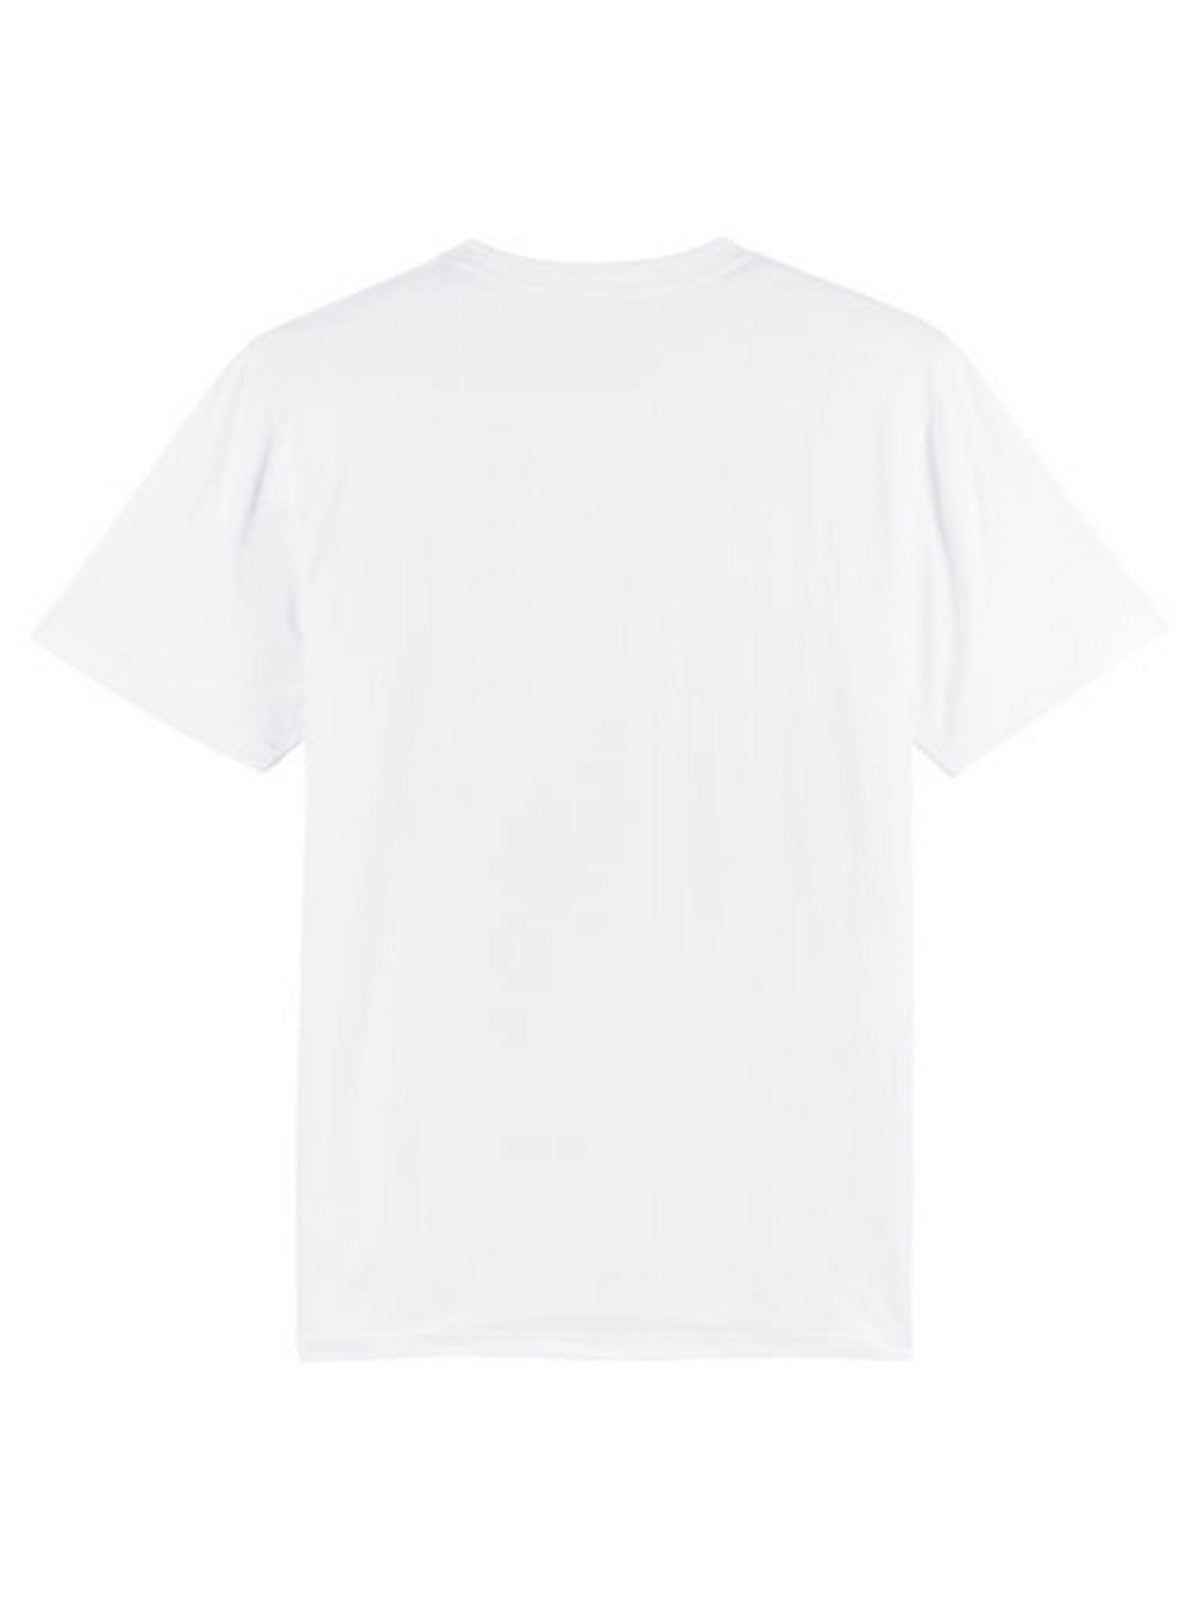 BARON FILOU T-Shirt et Polo Hommes T-SHIRT FILOU XVIII Blanc